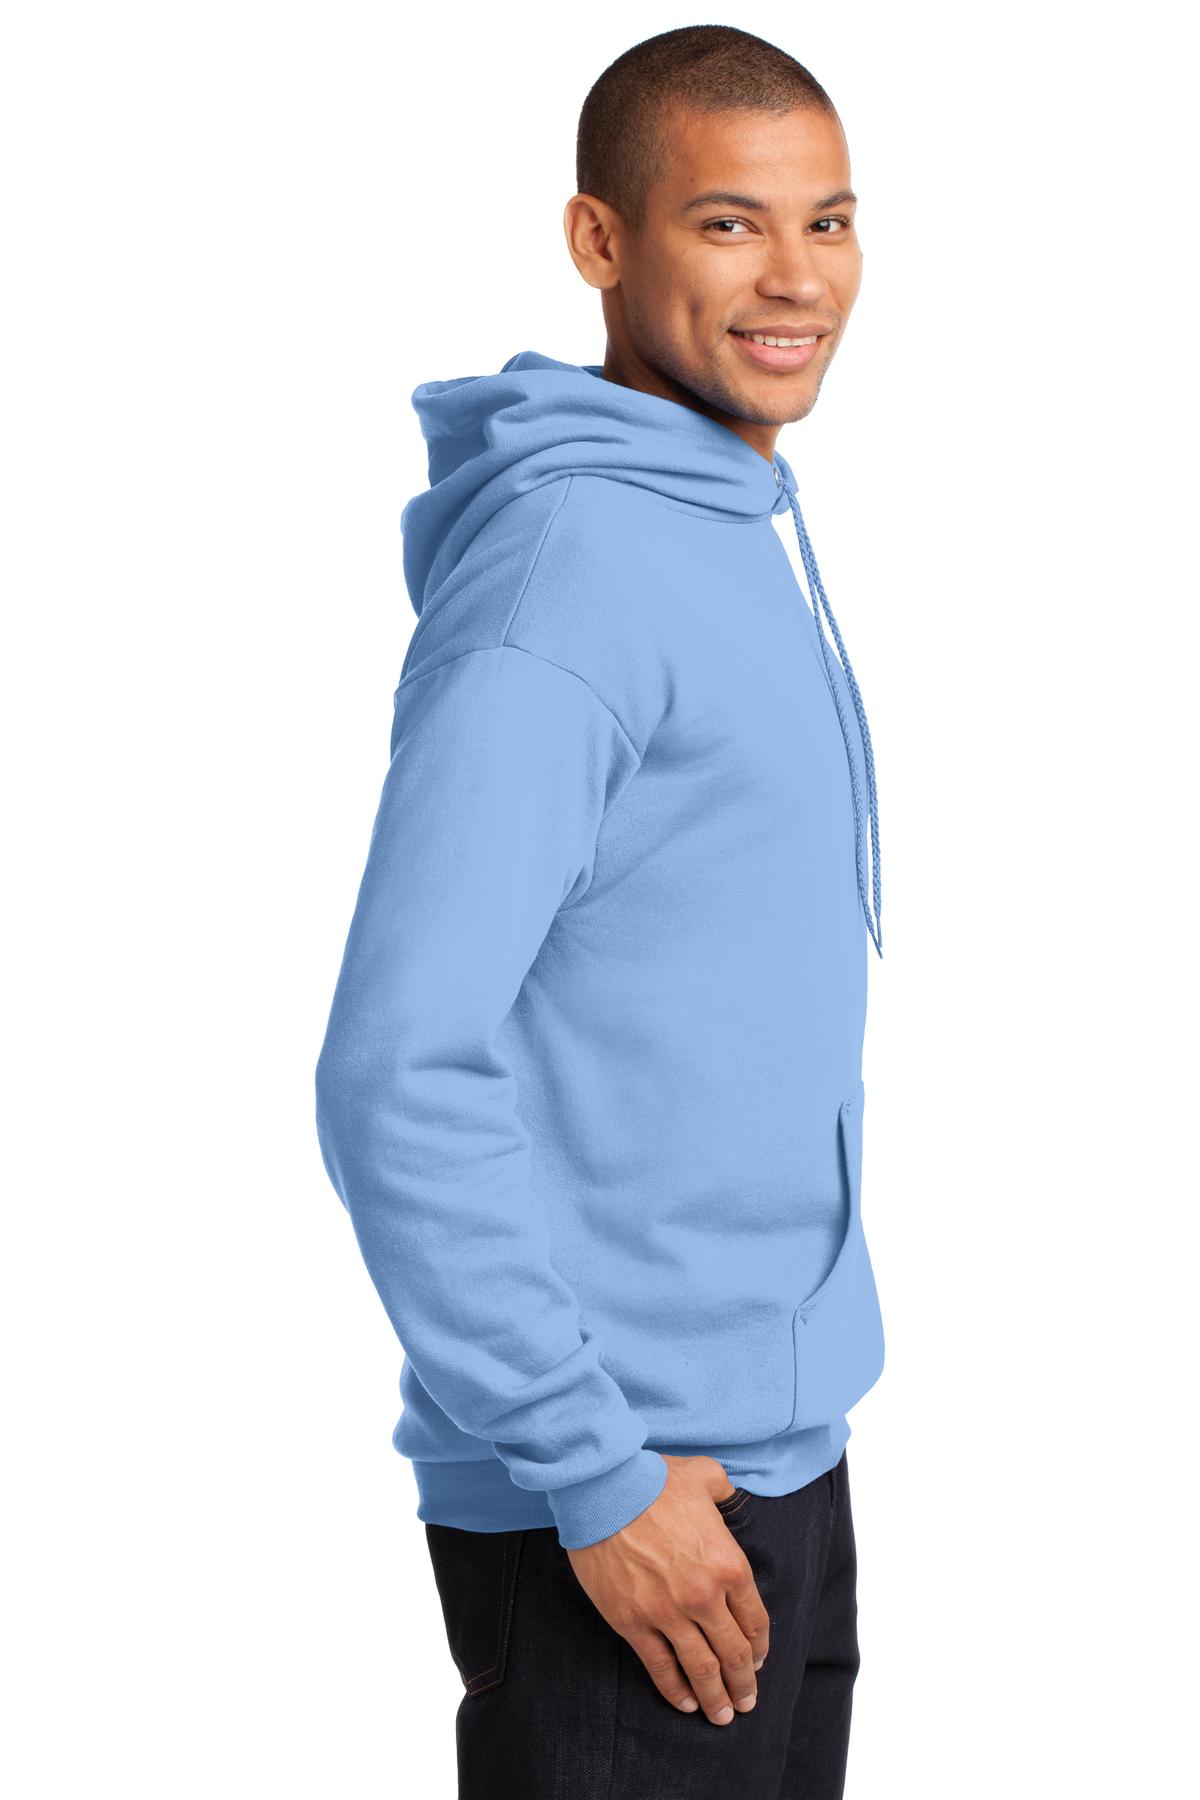 Port & Company® - Core Fleece Pullover Hooded Sweatshirt. PC78H [Light Blue] - DFW Impression